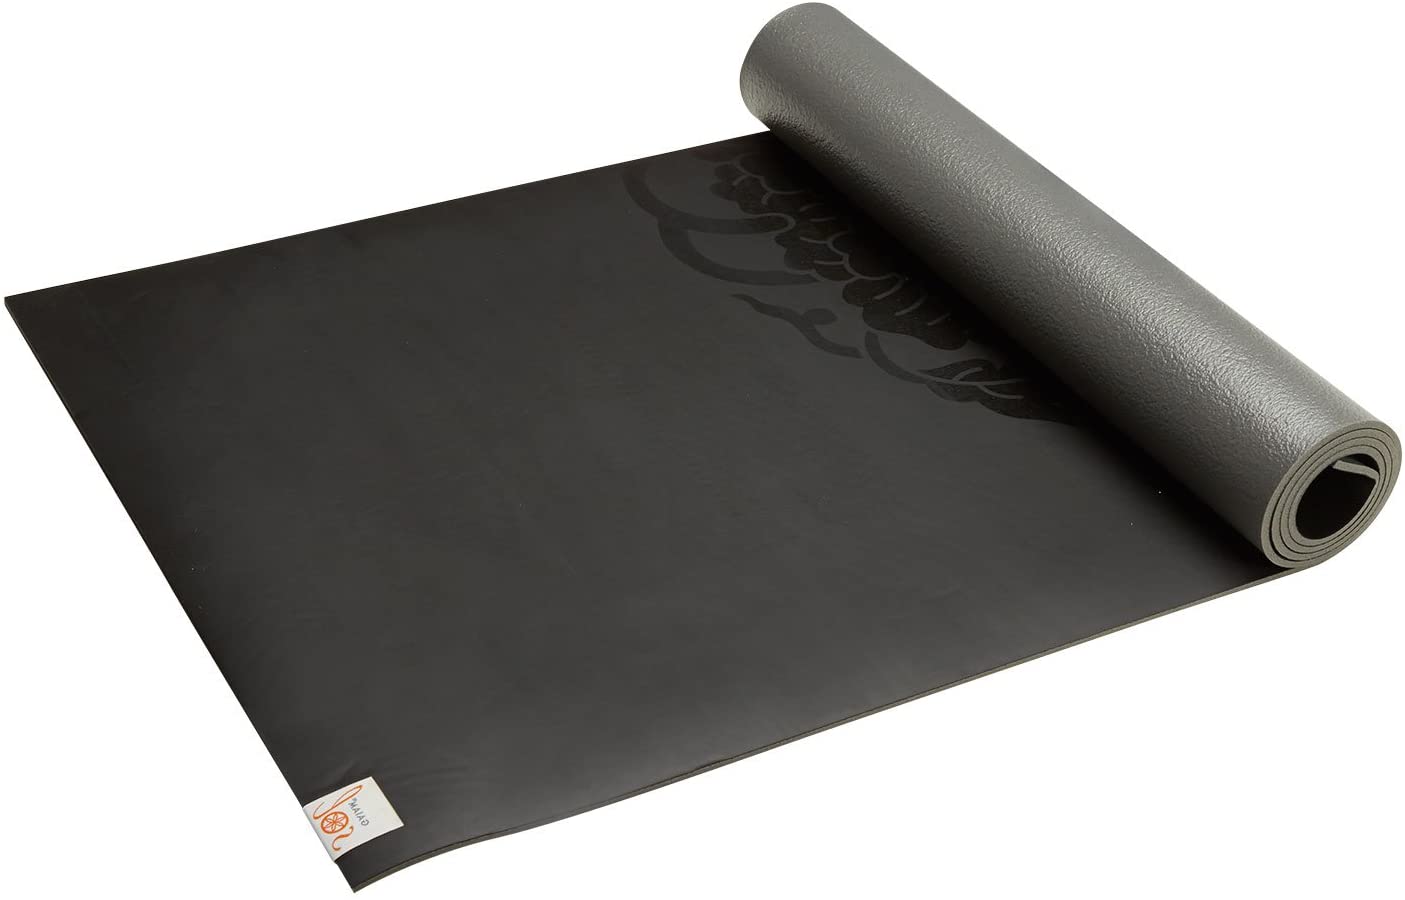 prAna Verde natural rubber yoga mat